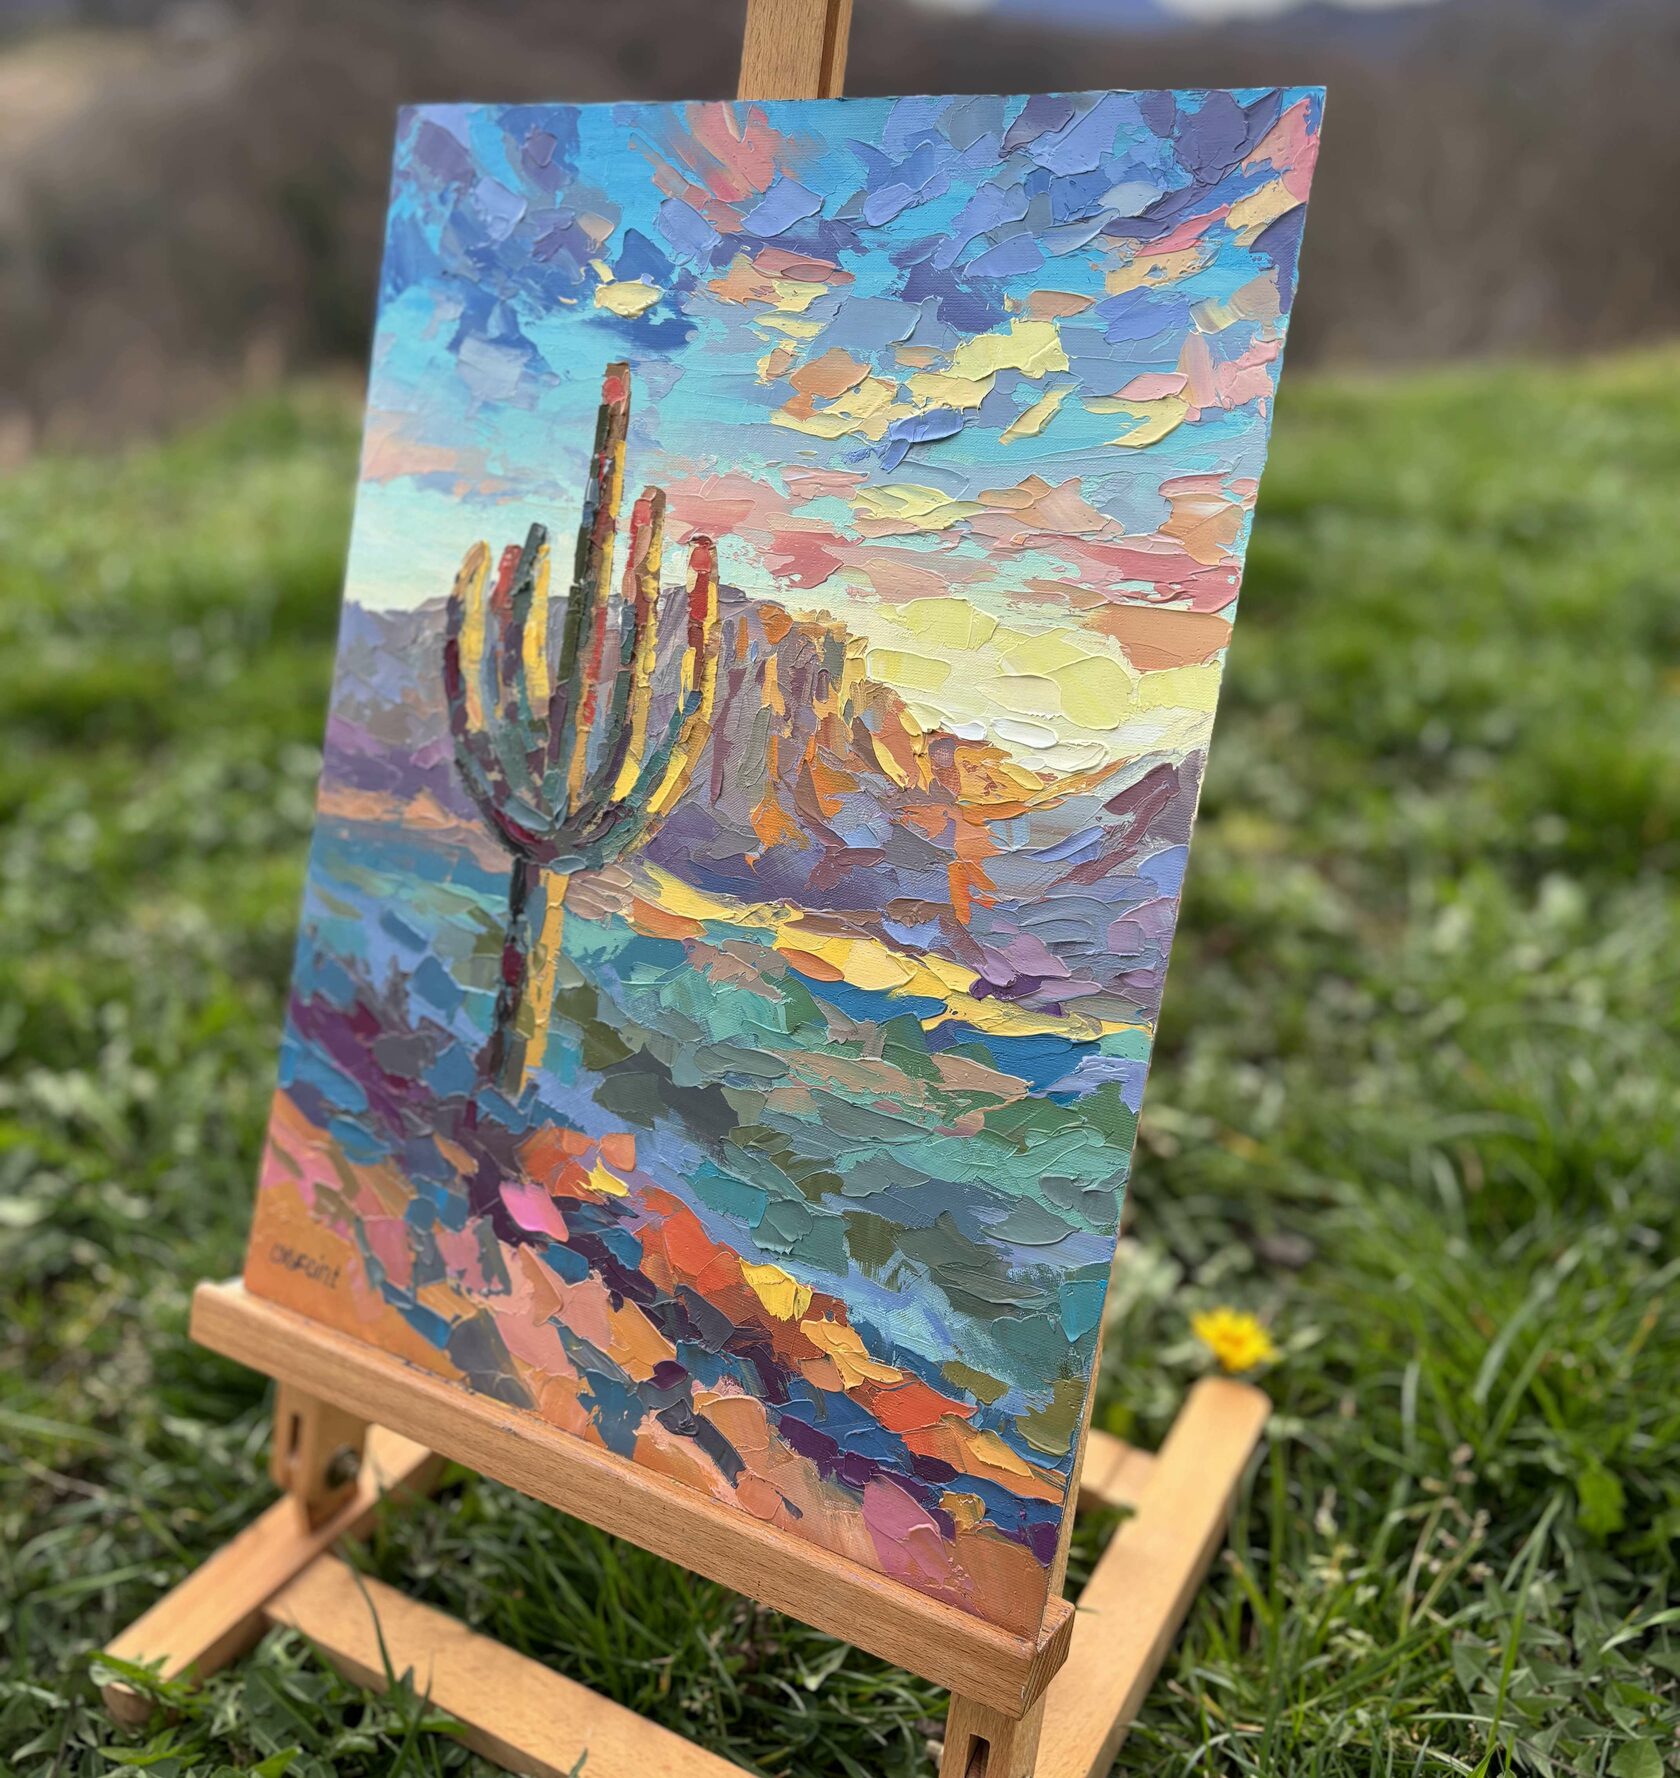 Saguaro oil painting, sunset in the desert abstract art, Arizona knife painting, artist OXYPOINT Oxana Kravtsova, painting for sale 